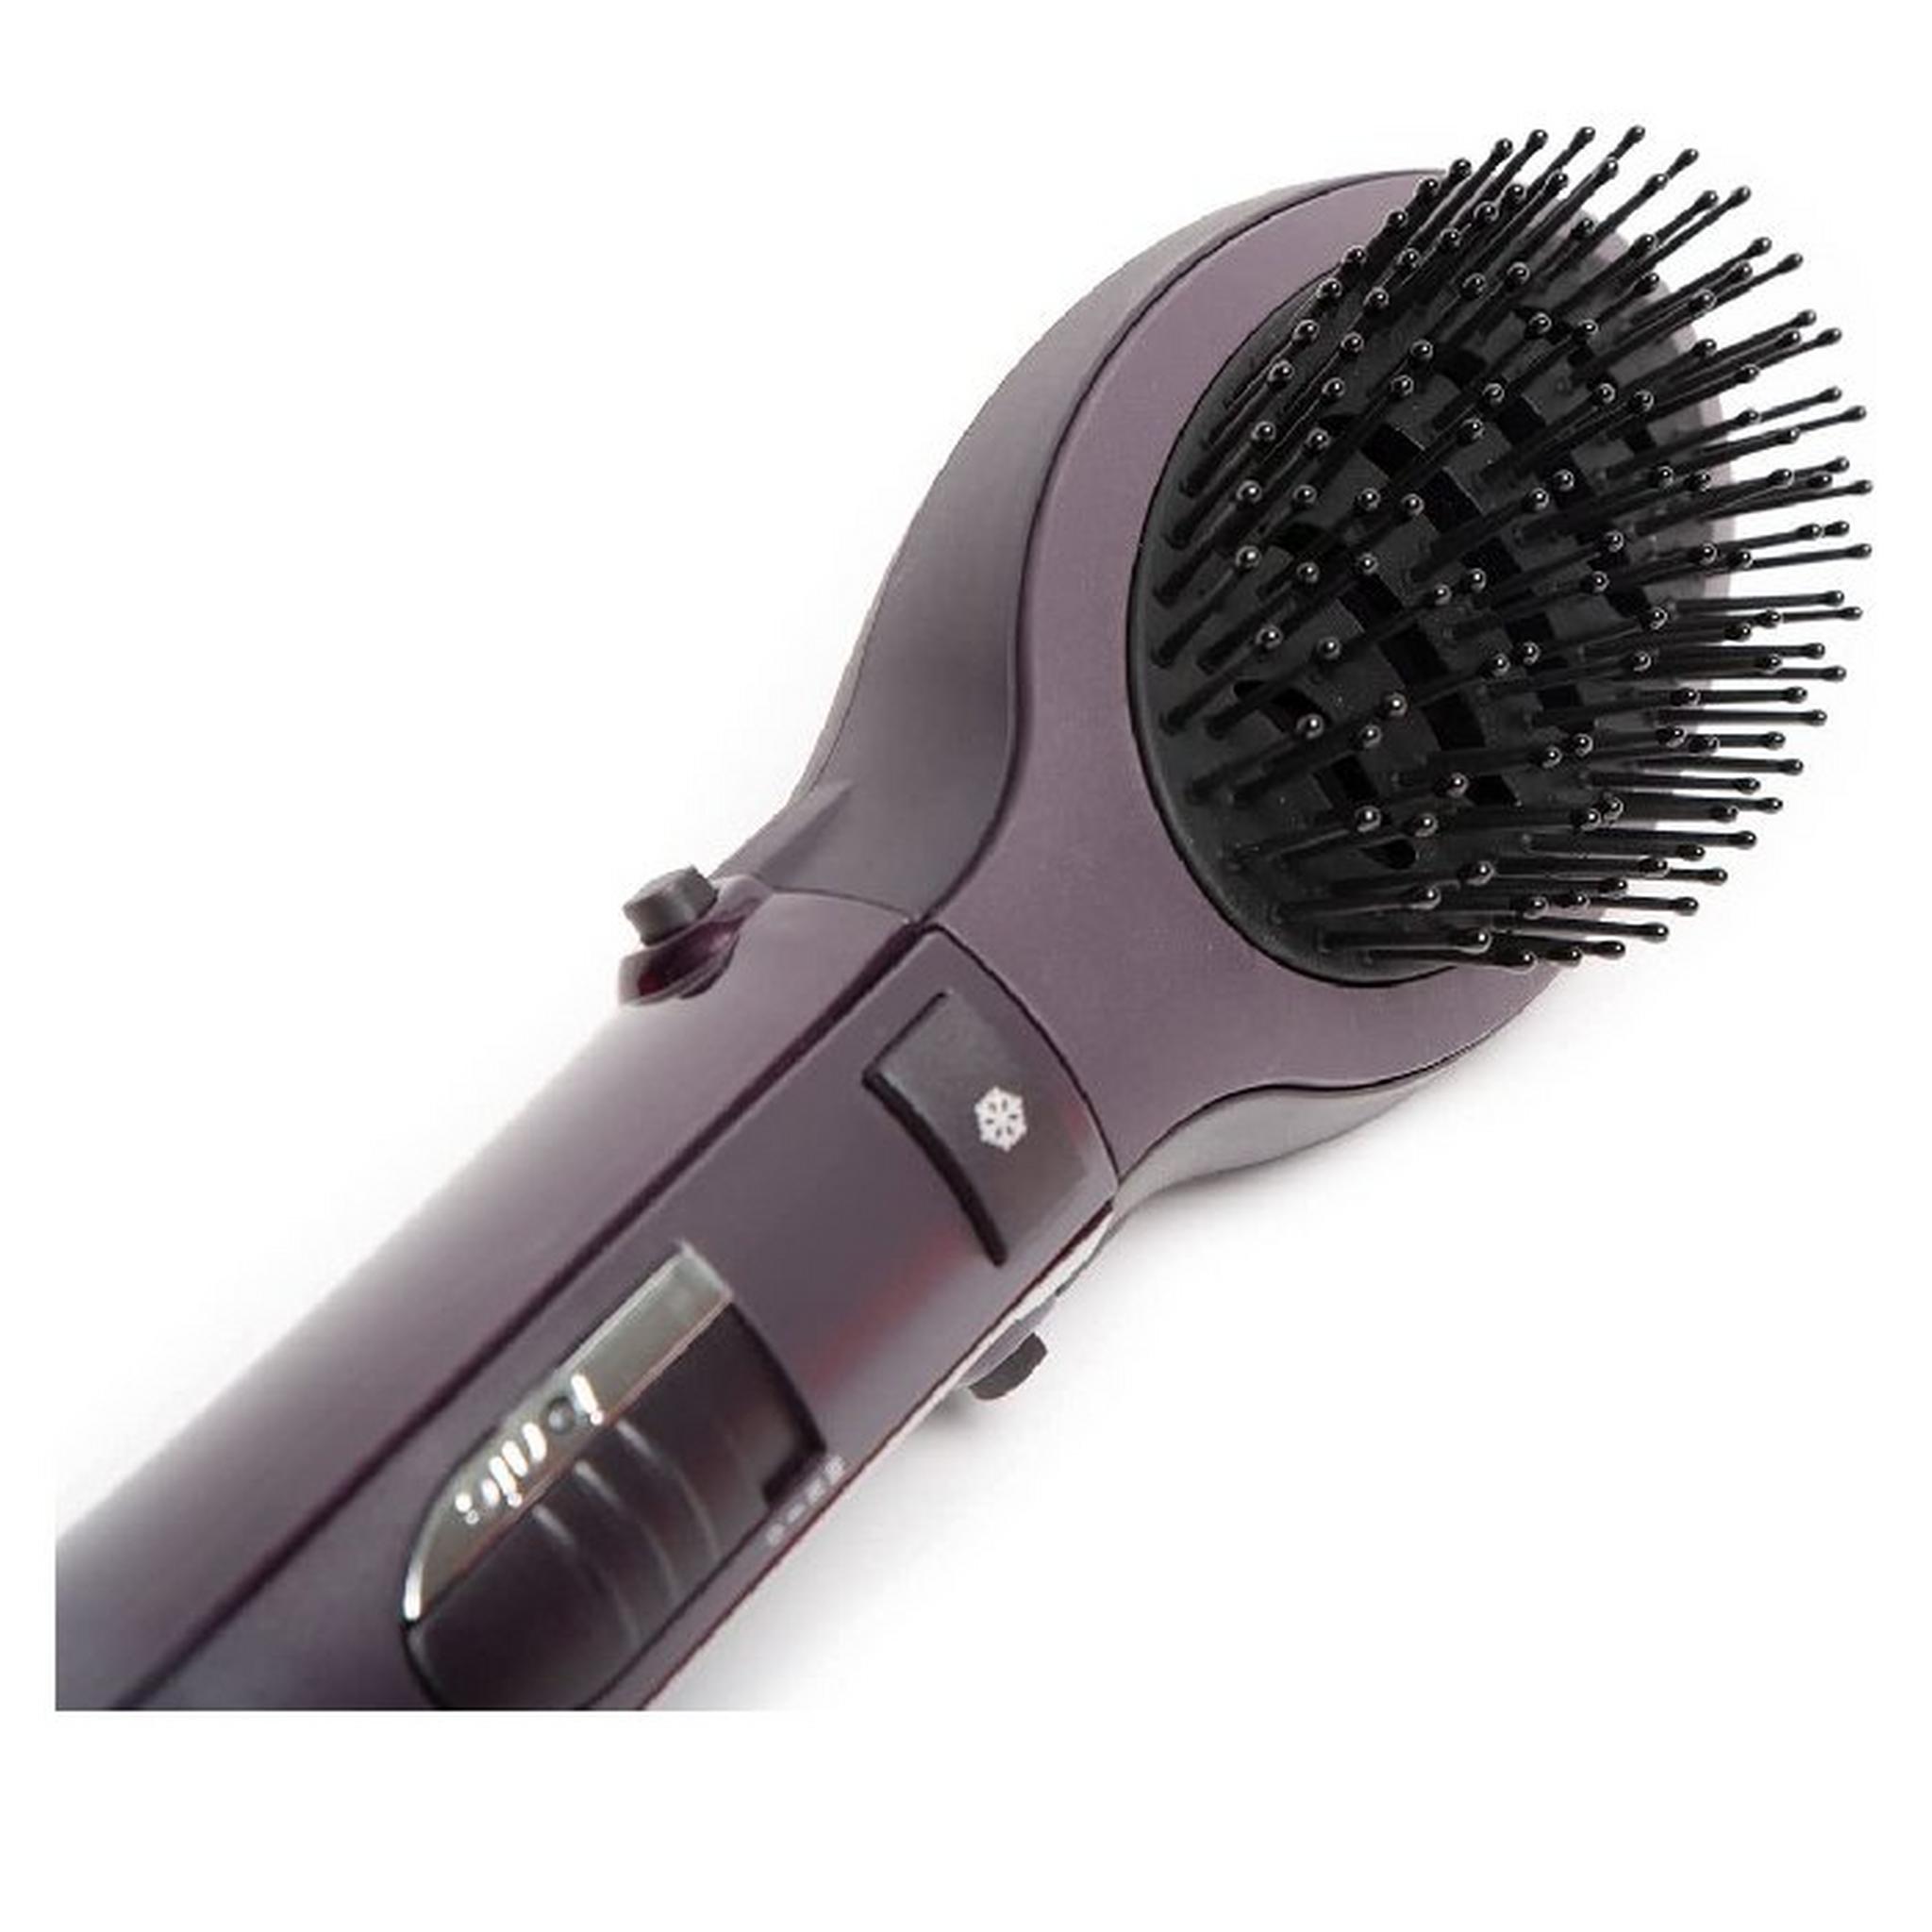 BaByliss Airbrush Hair Styler, 1000W, 3 Heat Settings, BABAS115PSDE - Purple